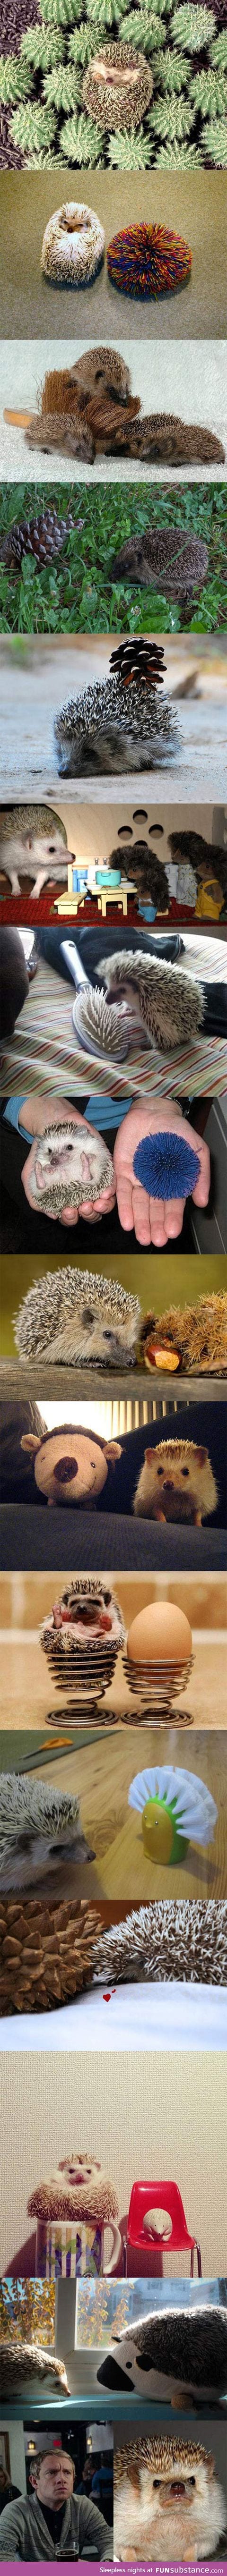 Hedgehogs next to things that look like hedgehogs